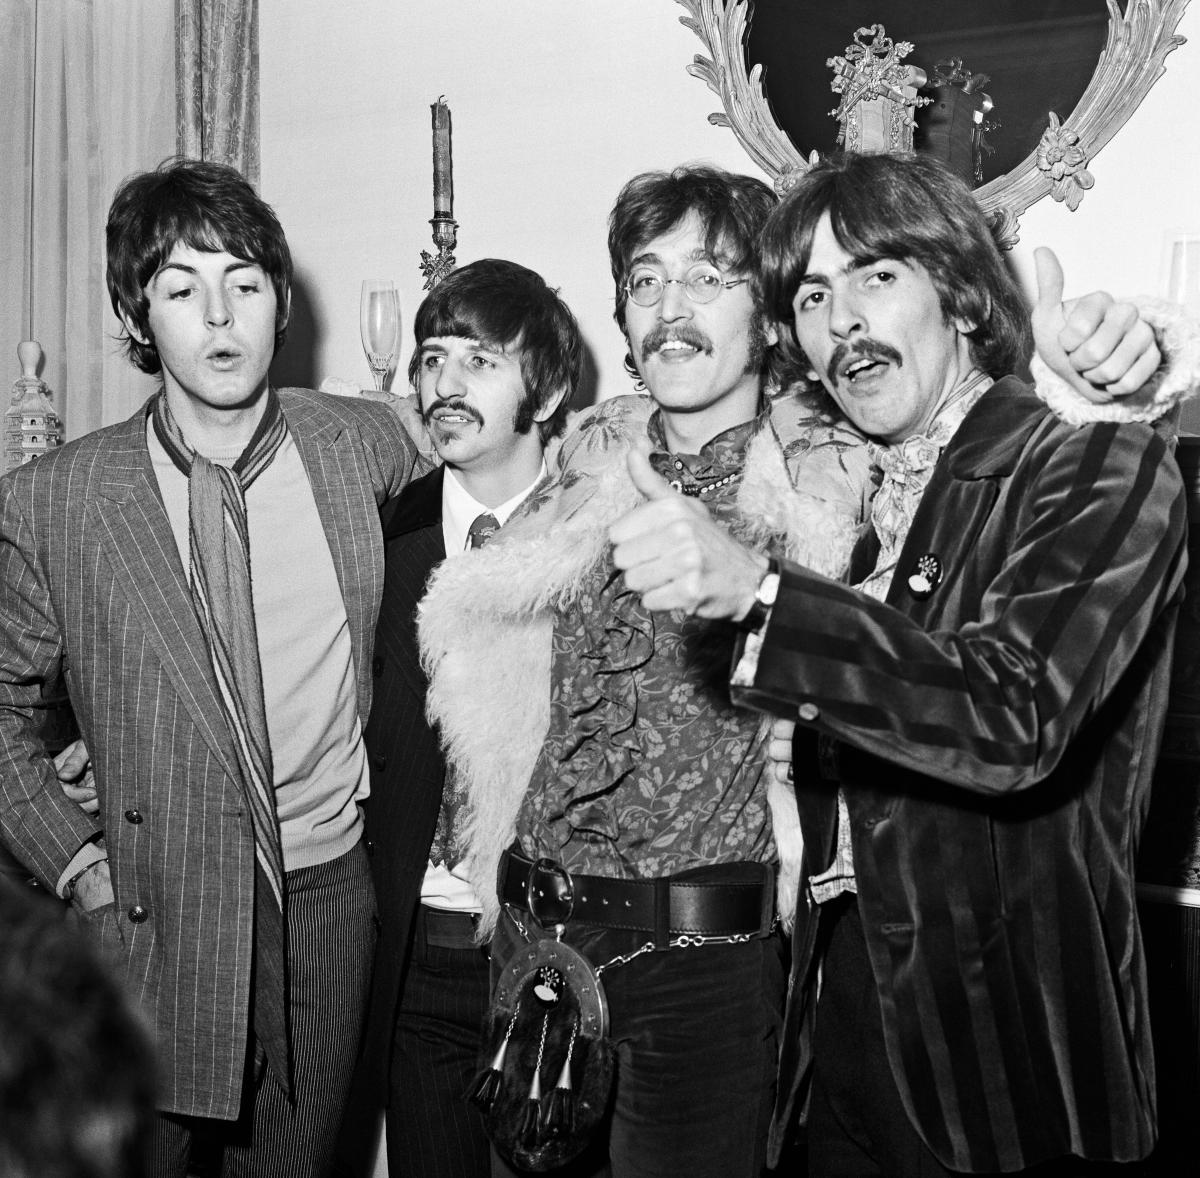 Peter Jackson Reveals More Beatles Music Is Conceivable